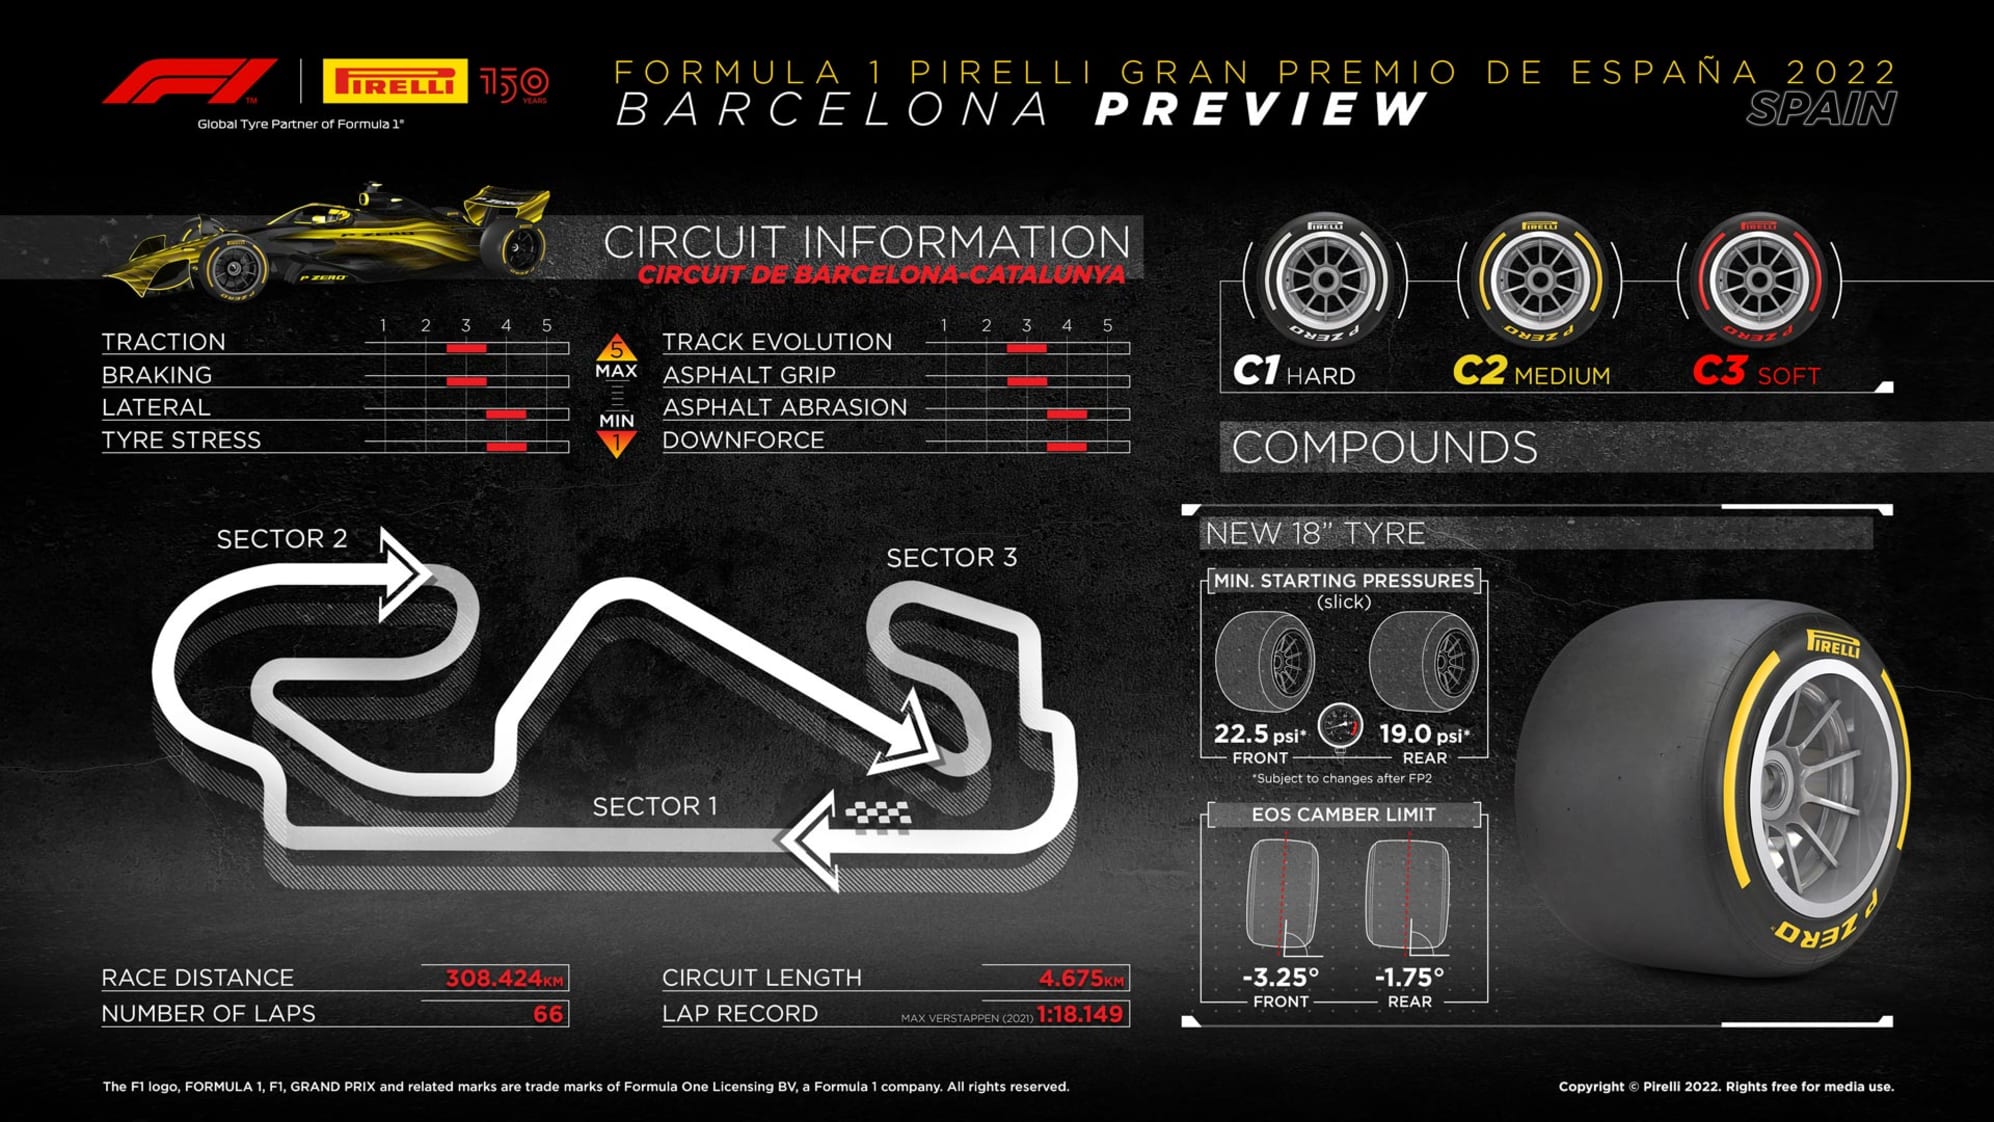 Pirelli's tyre infographic for the 2022 Spanish Grand Prix